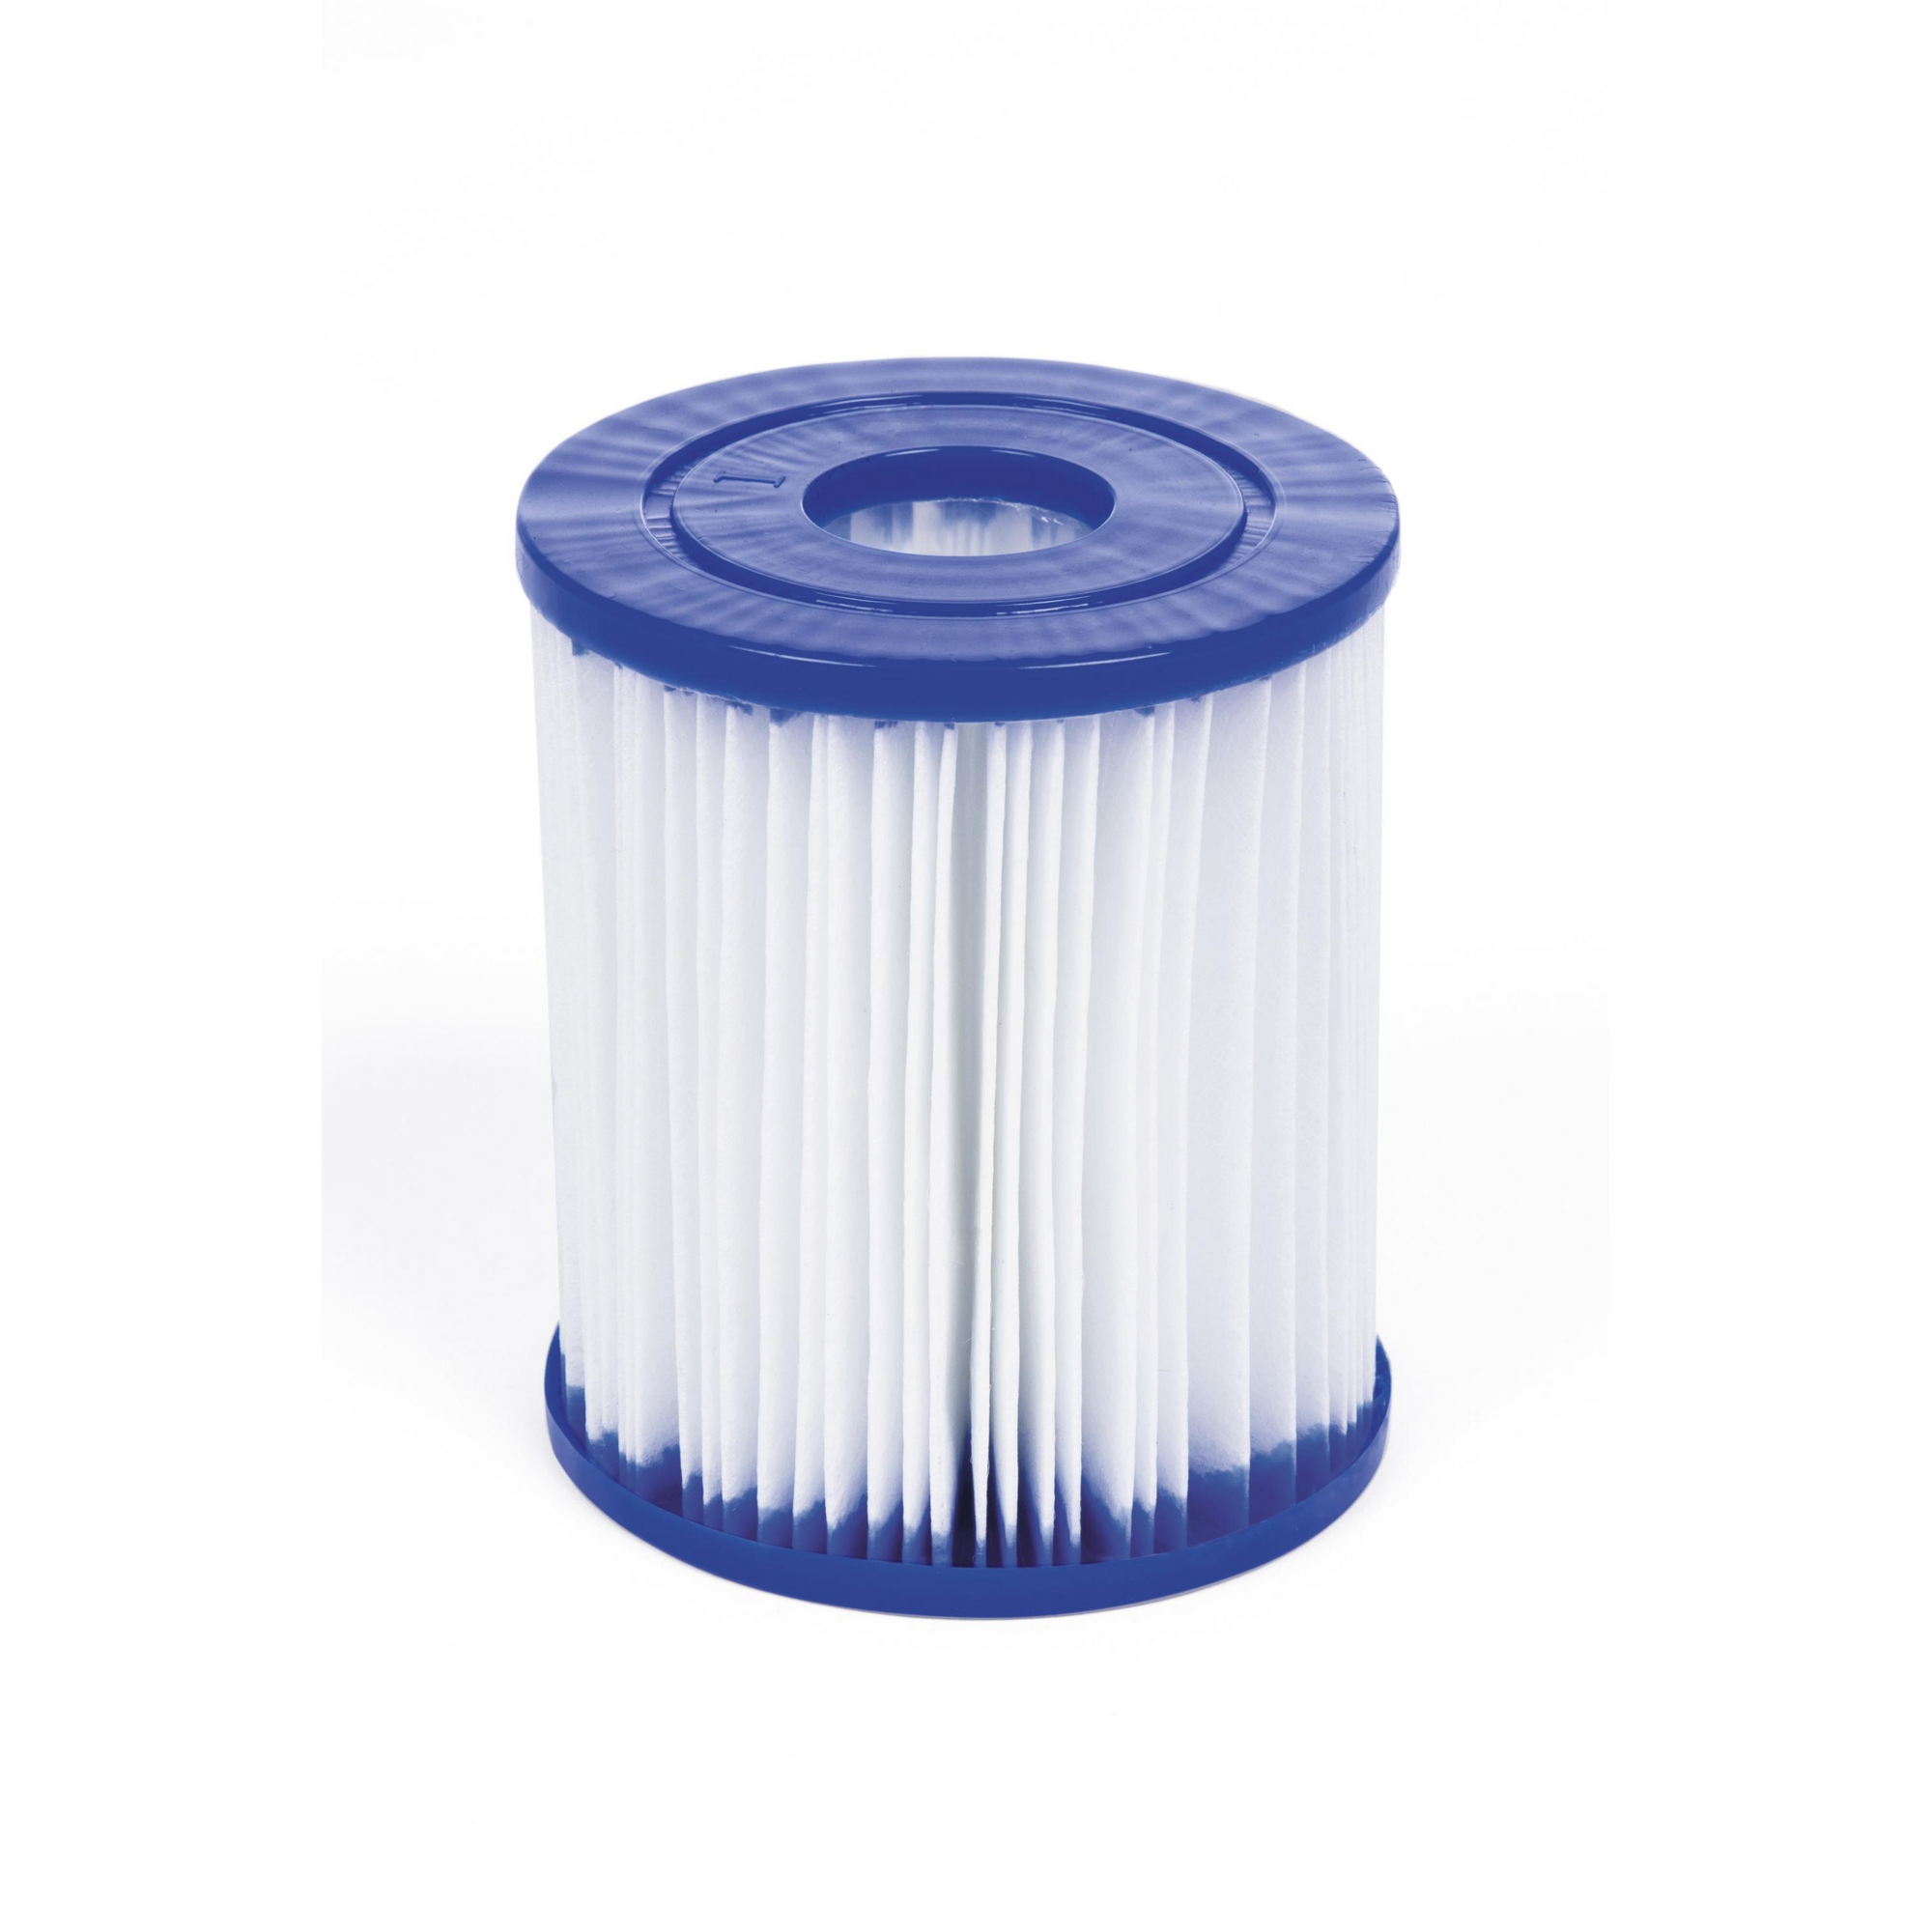 Aufstellpool 'Fast Set' blau Ø 305 x 66 cm, mit Filterpumpe + product picture